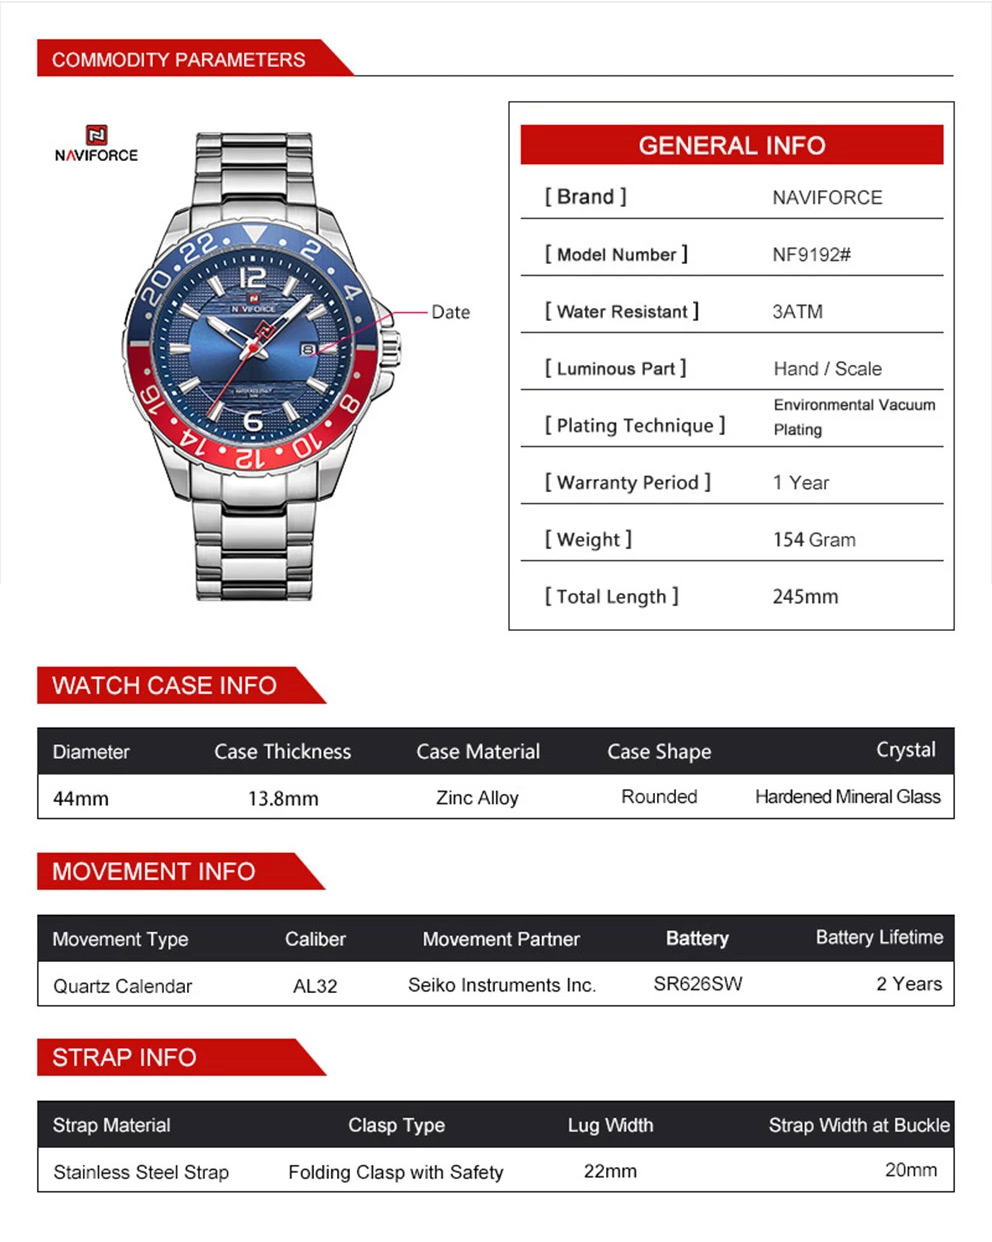 NaviForce-9192 men's analog wrist watch specifications